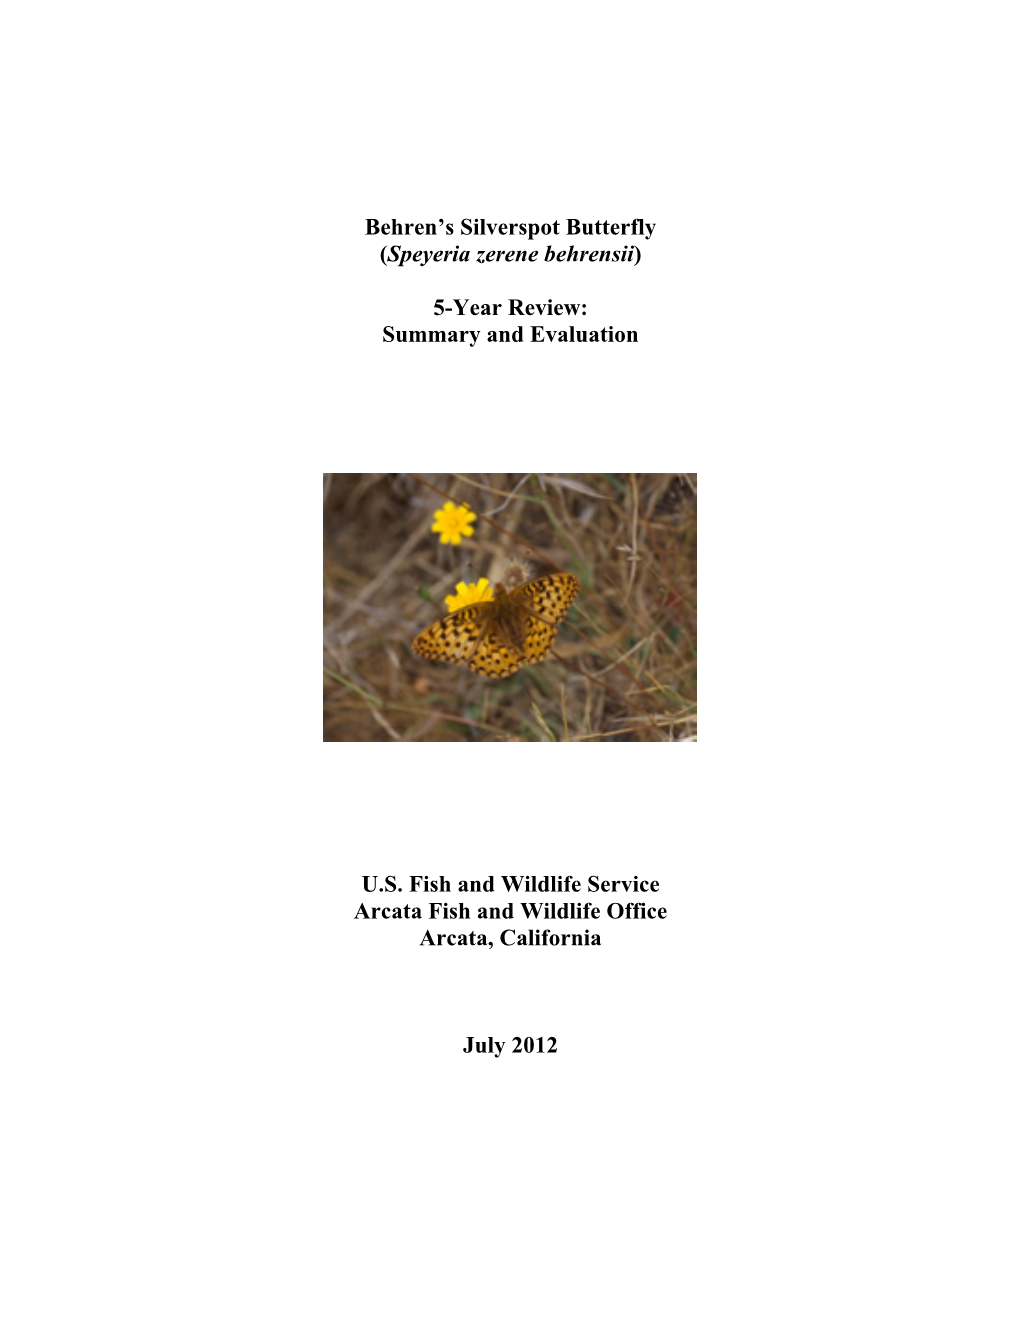 Behren's Silverspot Butterfly (Speyeria Zerene Behrensii) 5-Year Review: Summary and Evaluation U.S. Fish and Wildlife Service